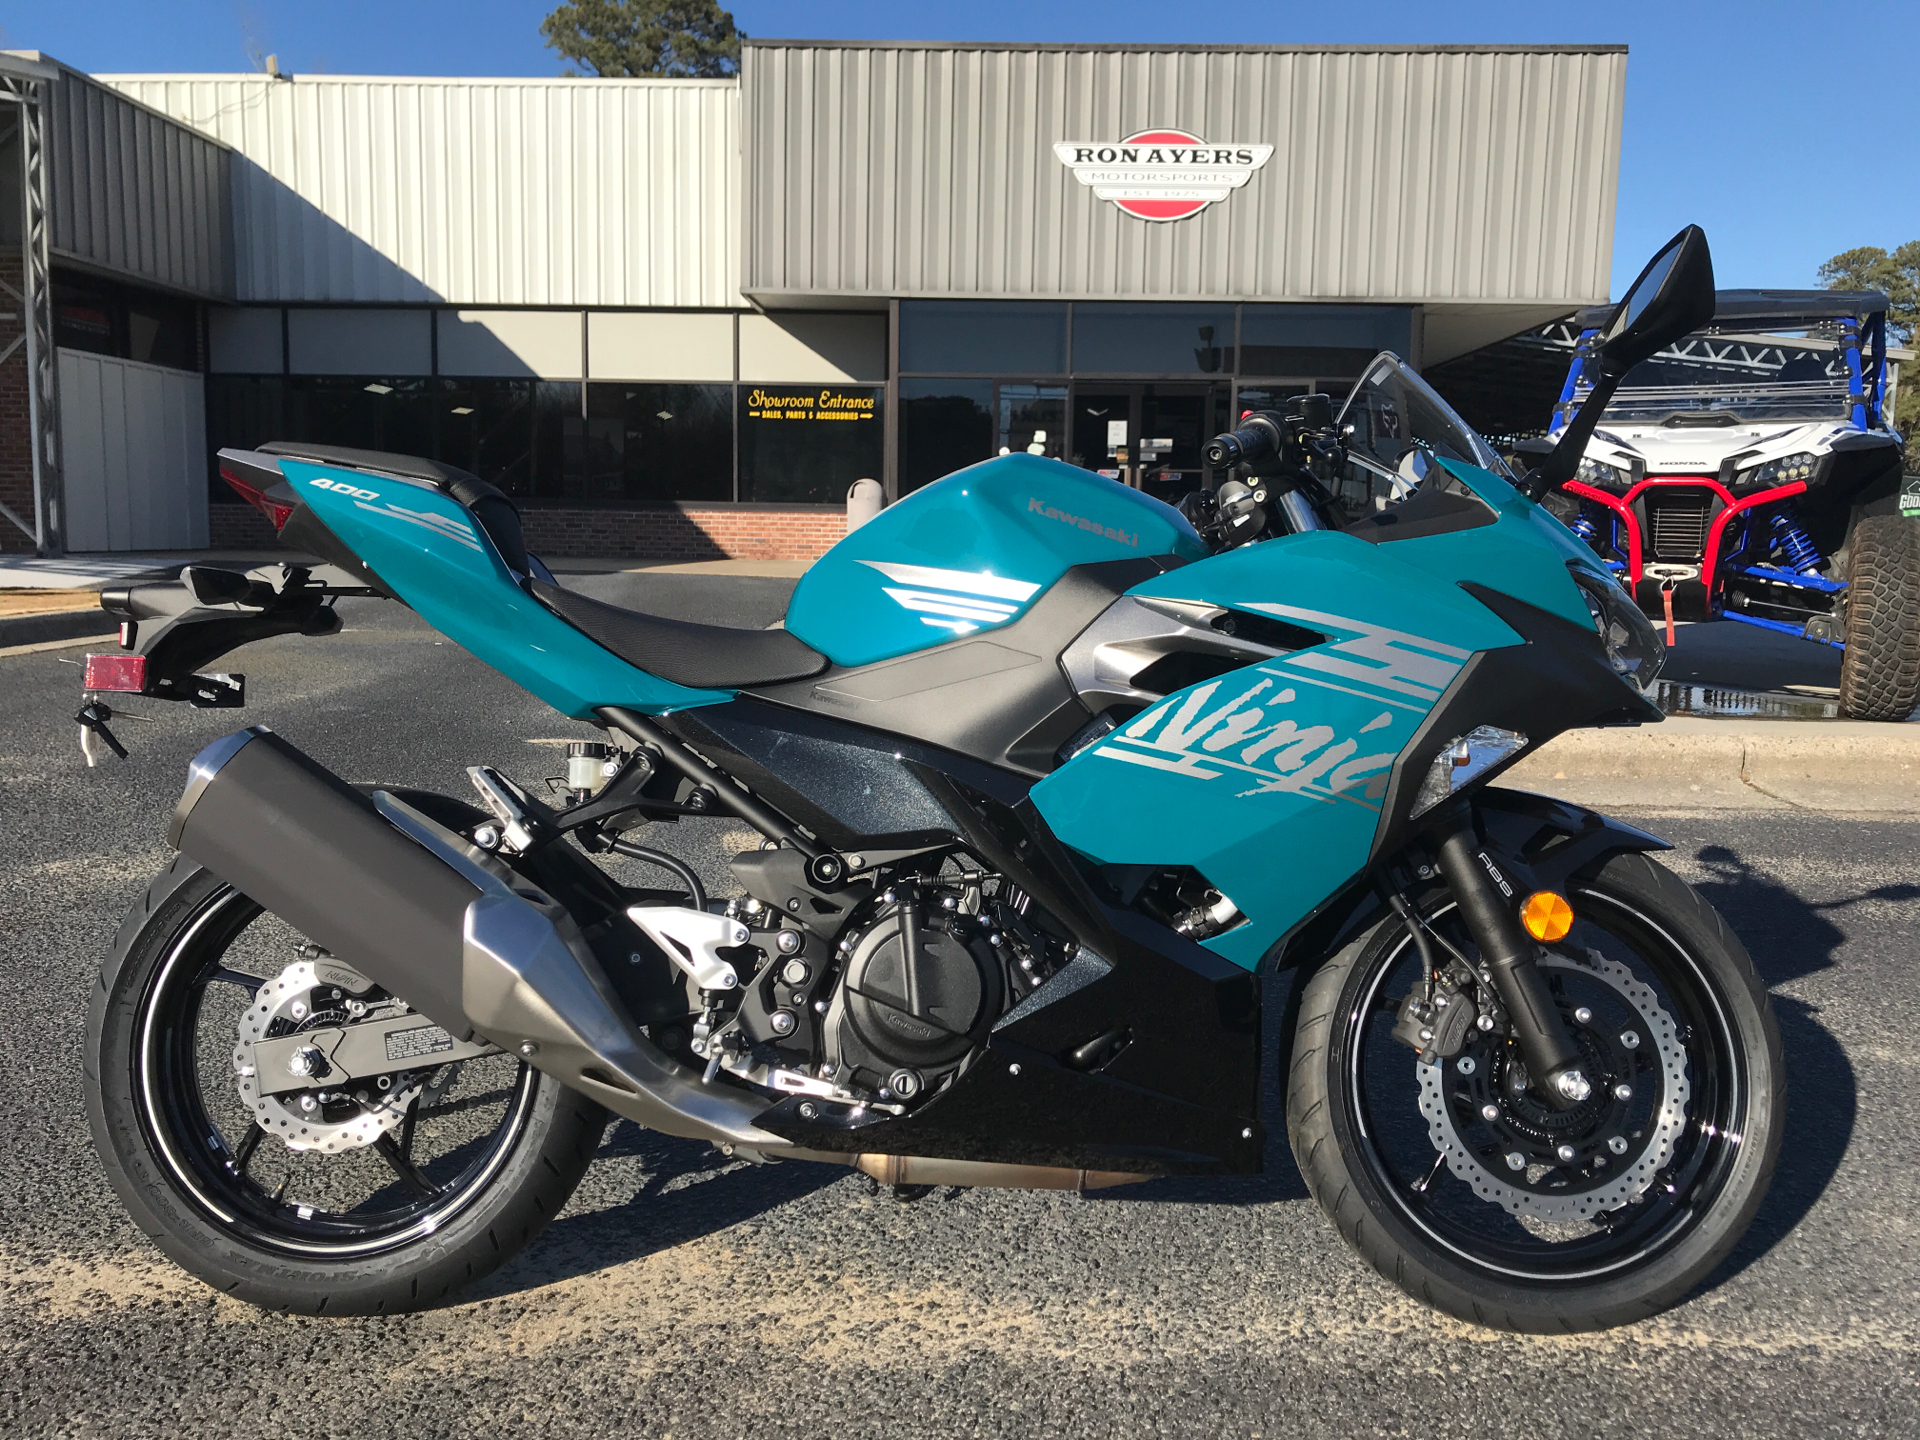 New 2021 Kawasaki Ninja 400 ABS Motorcycles in Greenville, NC Stock Number:...